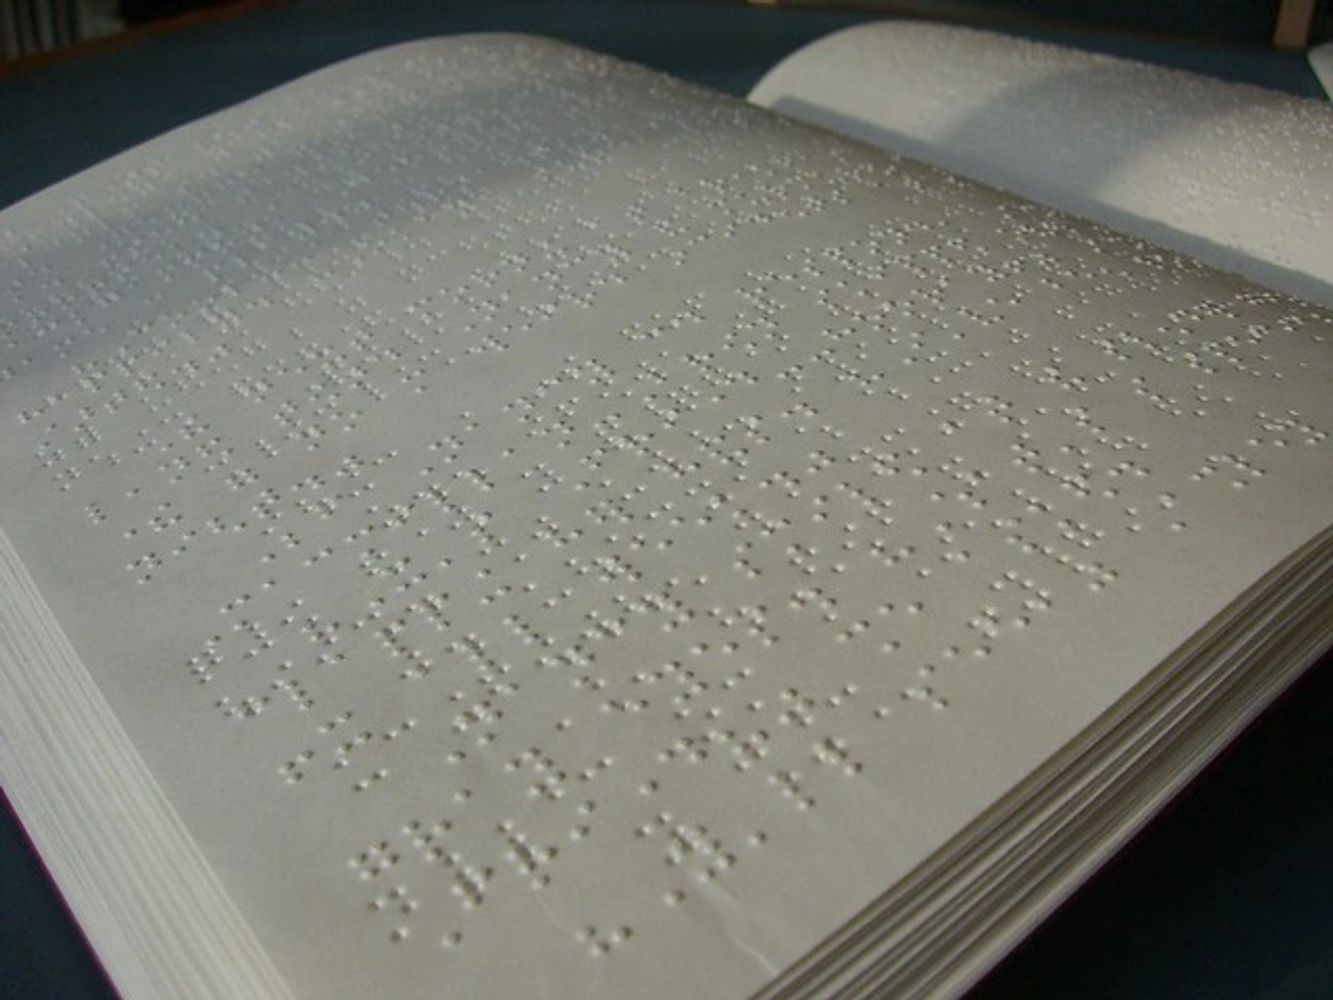 A braille book